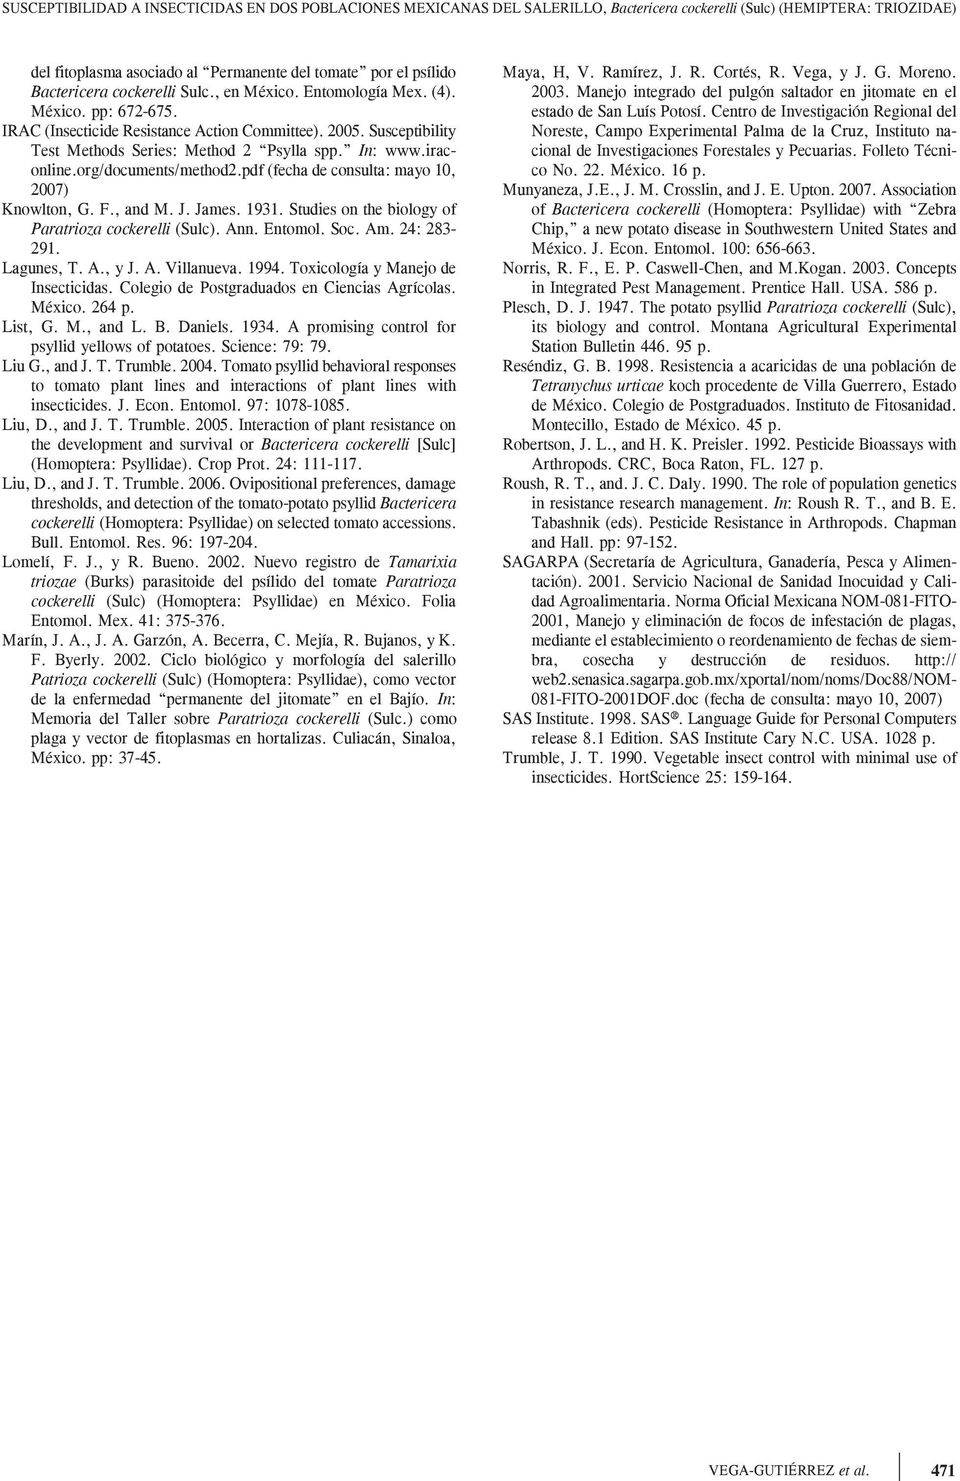 In: www.iraconline.org/documents/method2.pdf (fecha de consulta: mayo 10, 2007) Knowlton, G. F., and M. J. James. 1931. Studies on the biology of Paratrioza cockerelli (Sulc). Ann. Entomol. Soc. Am.